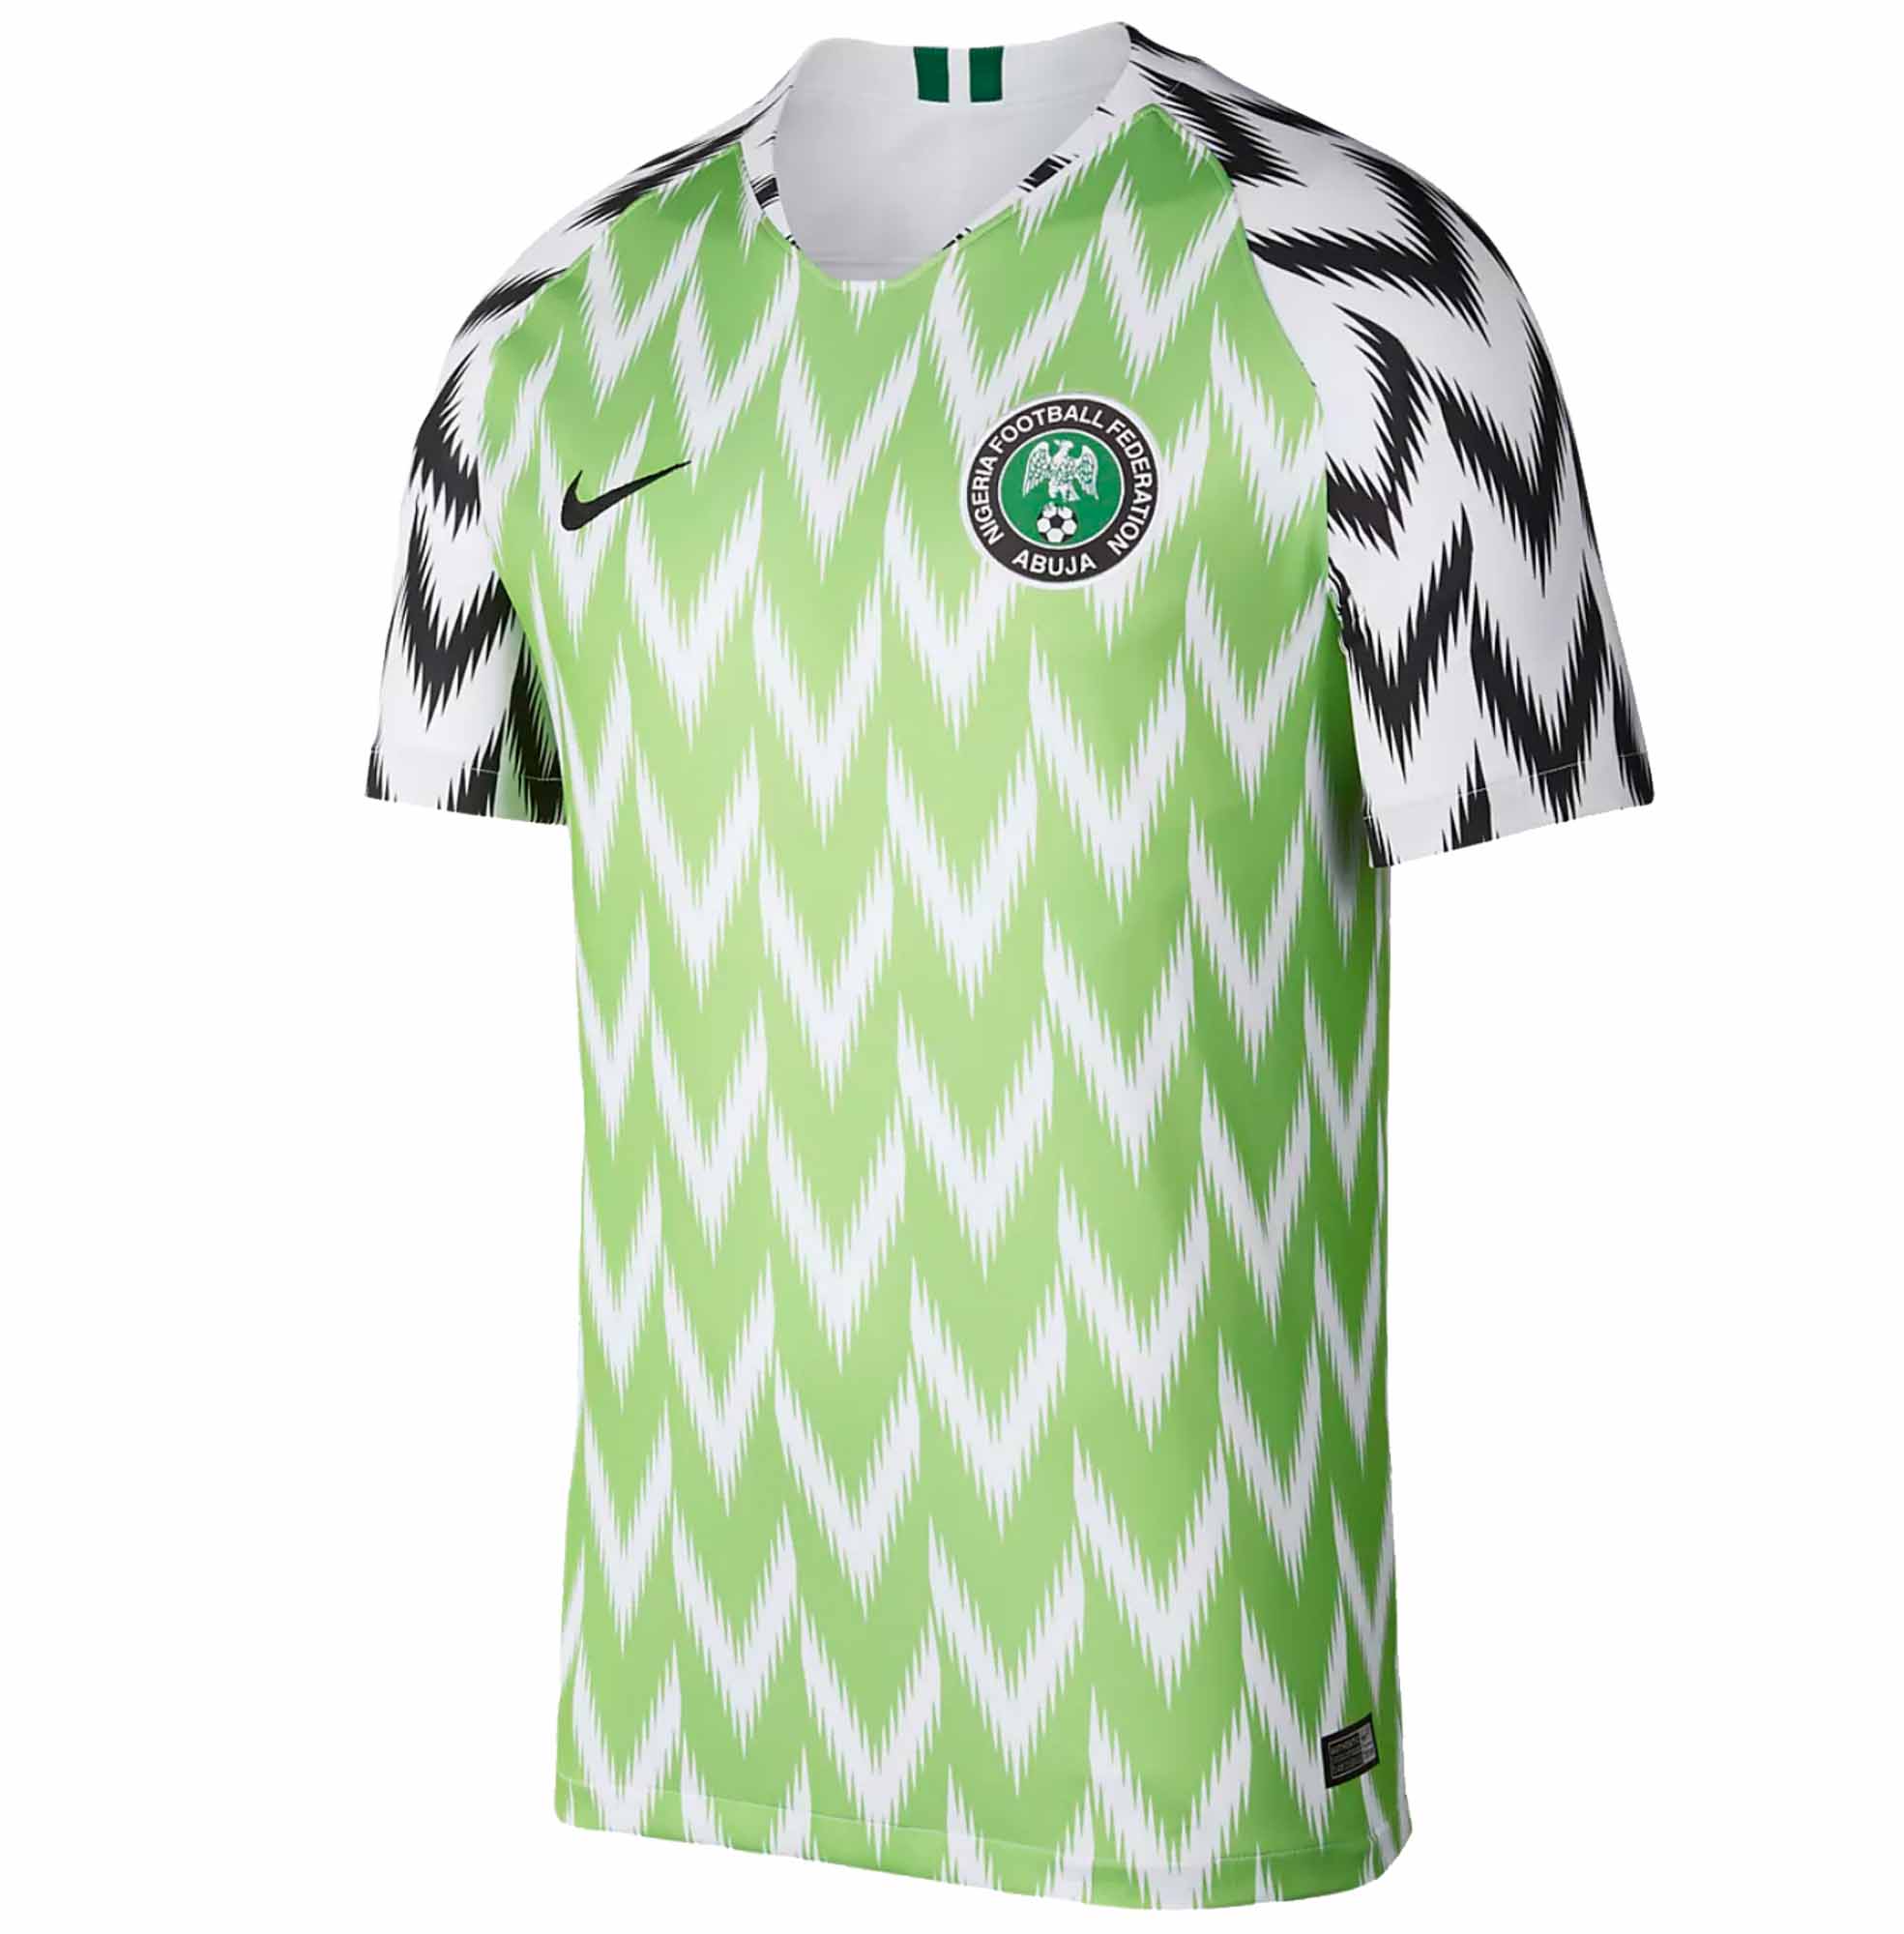 nigeria green jersey